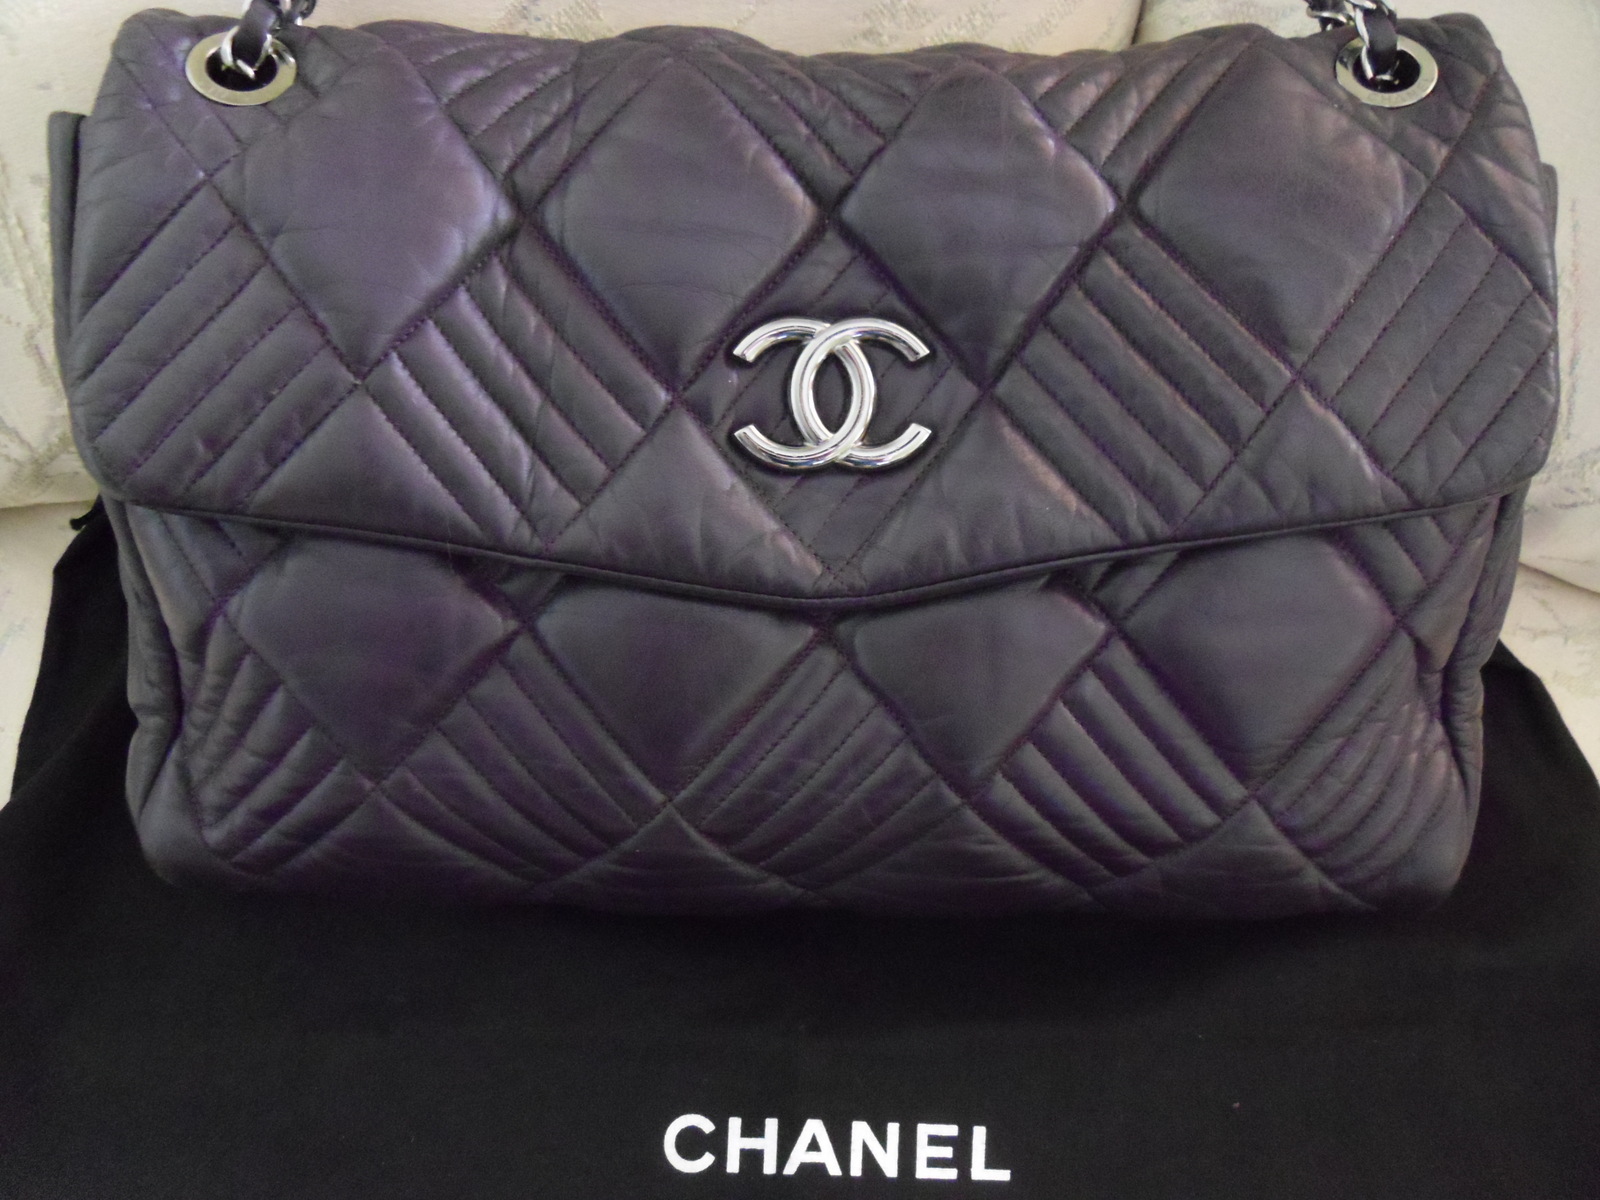 Chanel Maxi Classic Flap Handbag Maxi 22S Calfskin Purple in